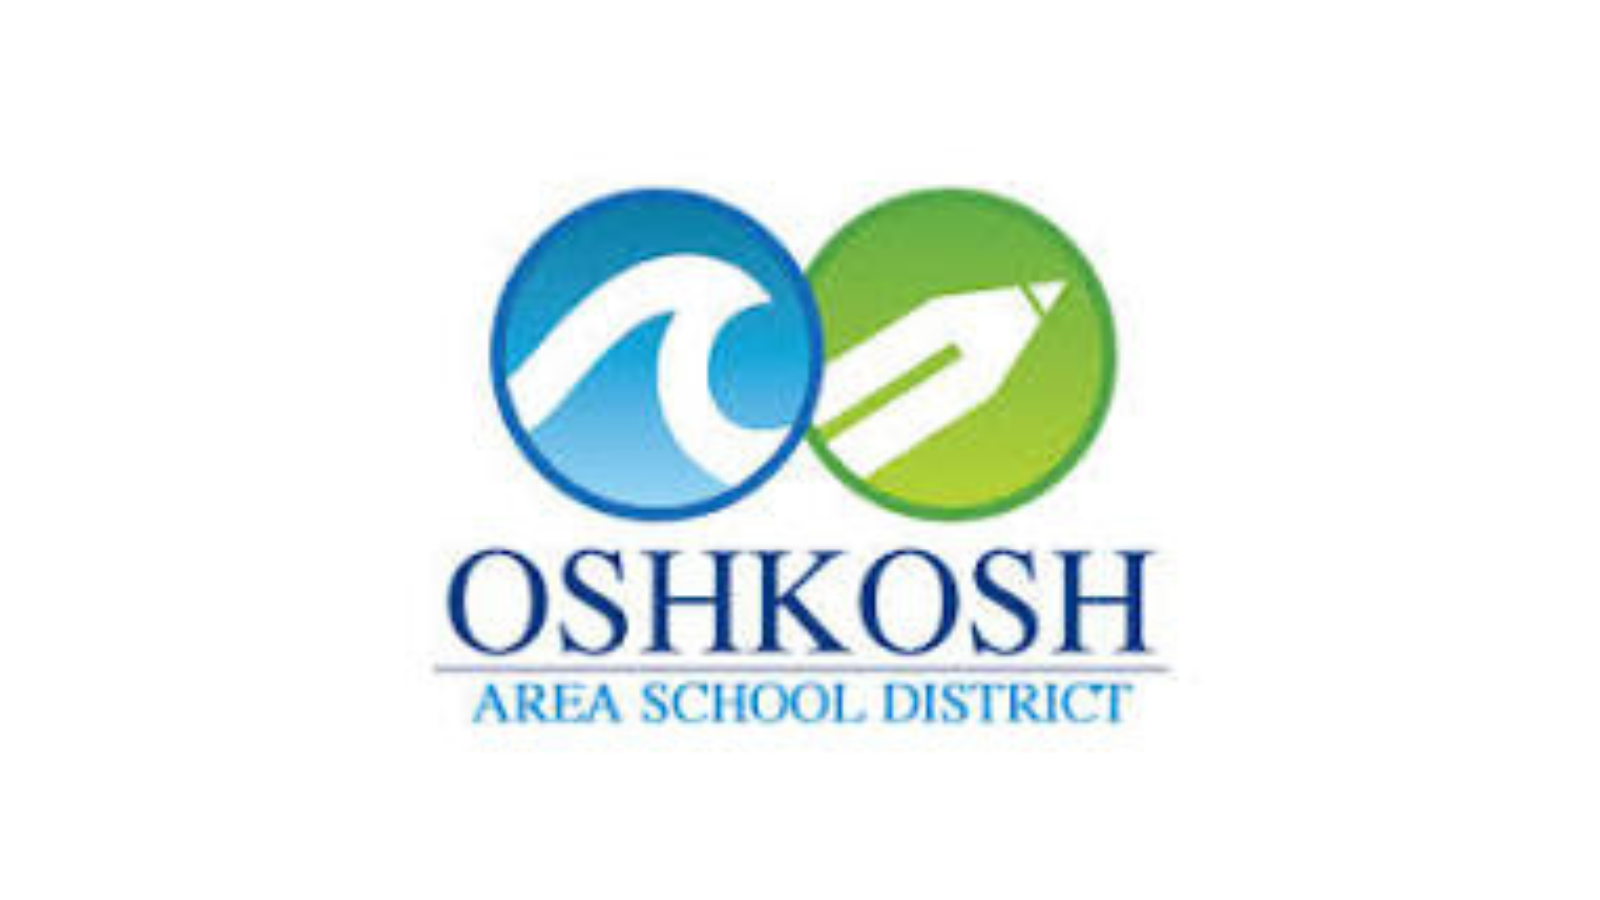 Oshkosh Area School District looks to fill open board seat